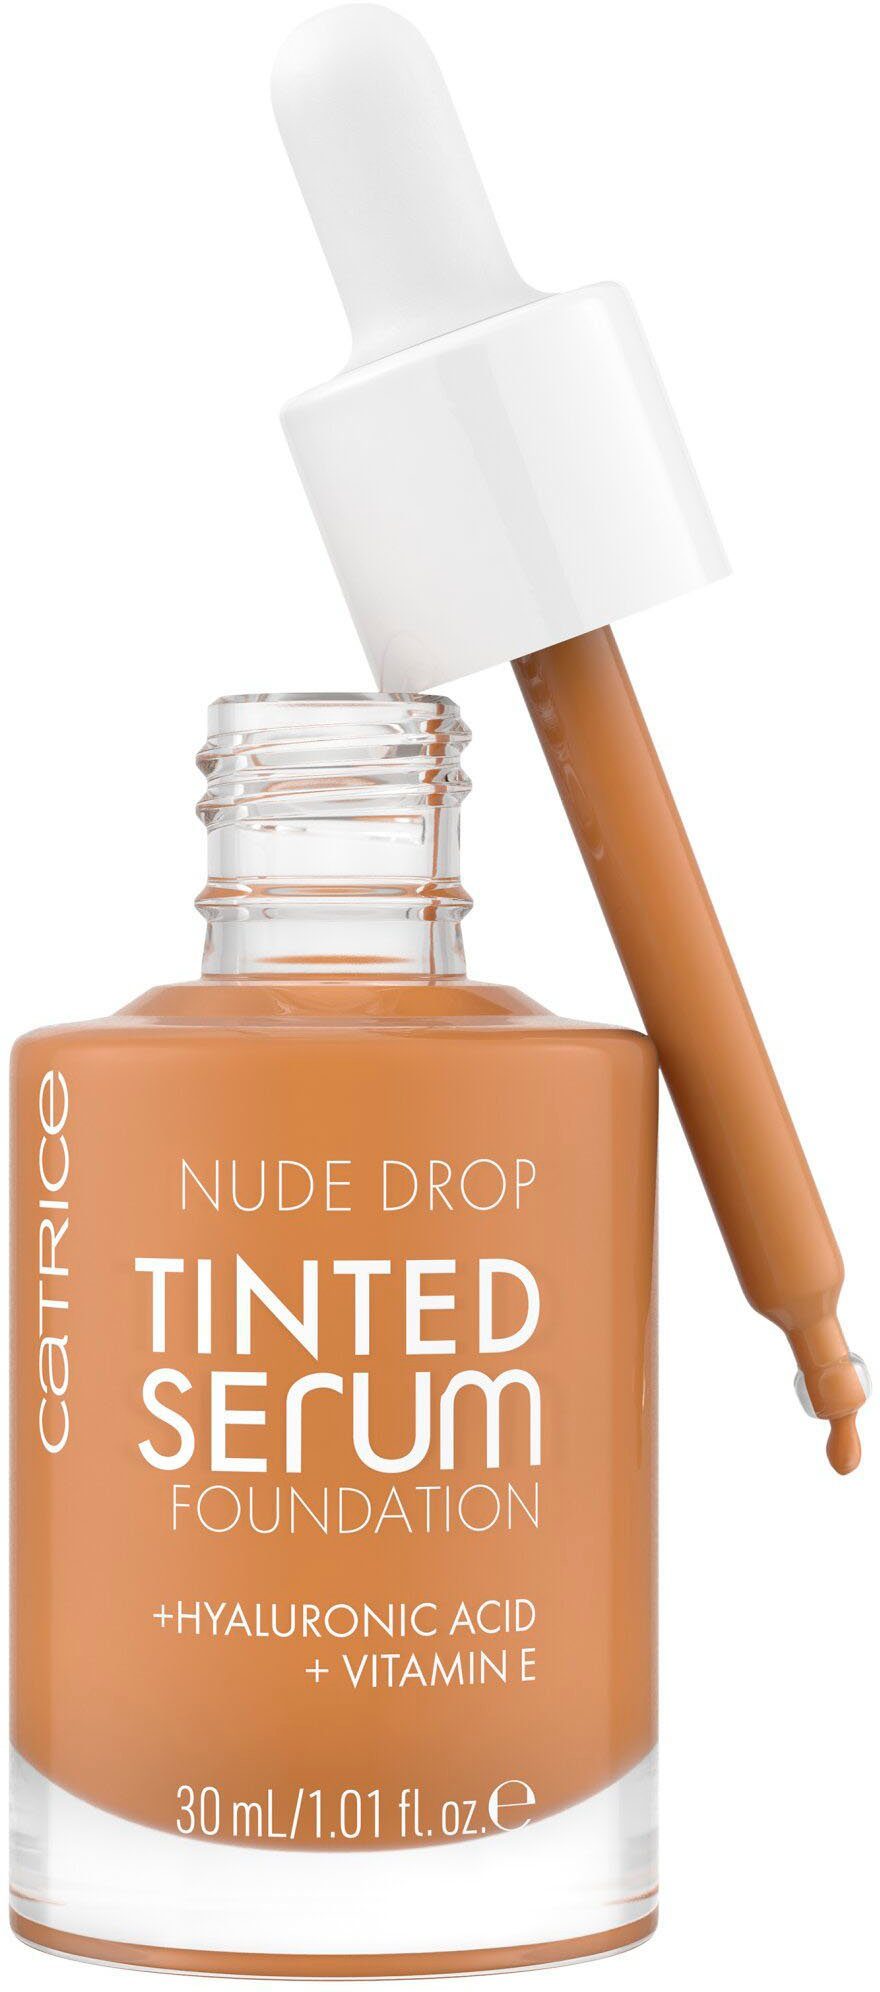 075C Drop Nude nude Catrice Foundation Tinted Foundation Serum